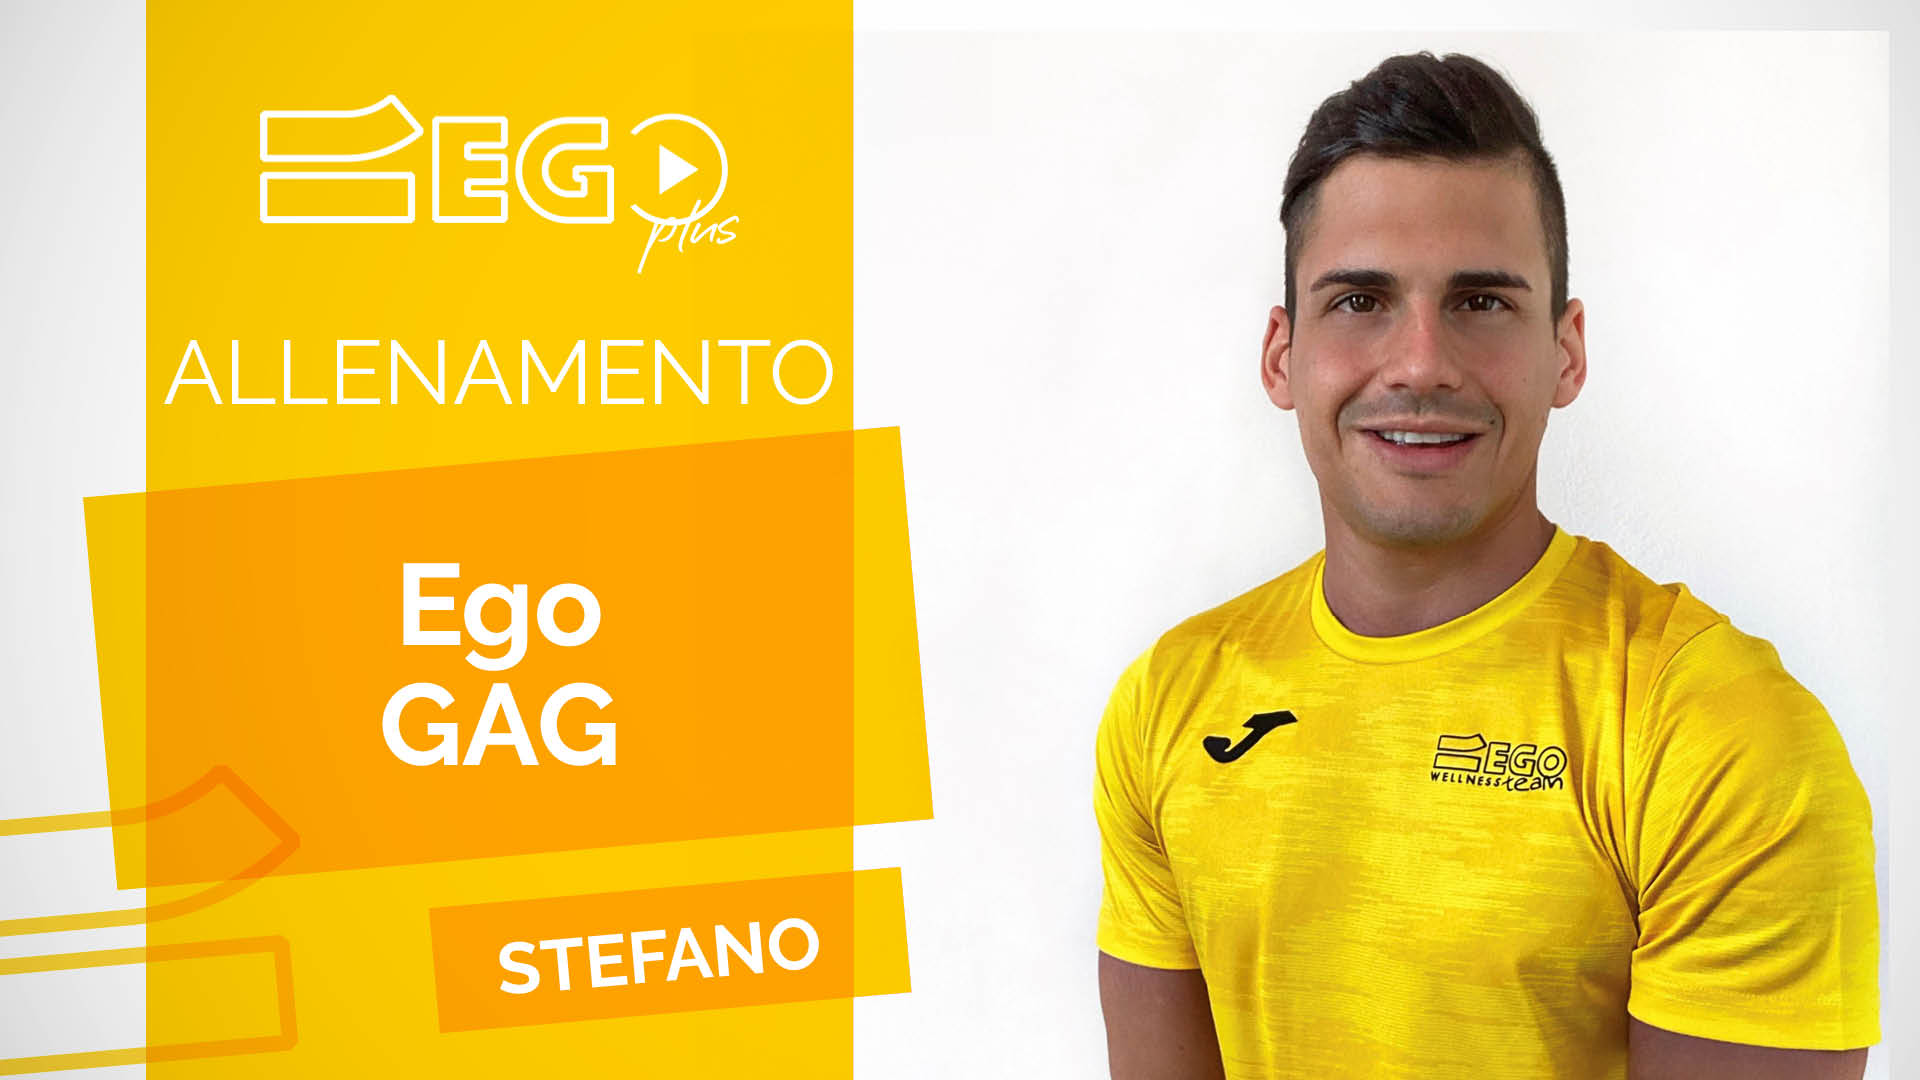 Ego-Gag-Stefano